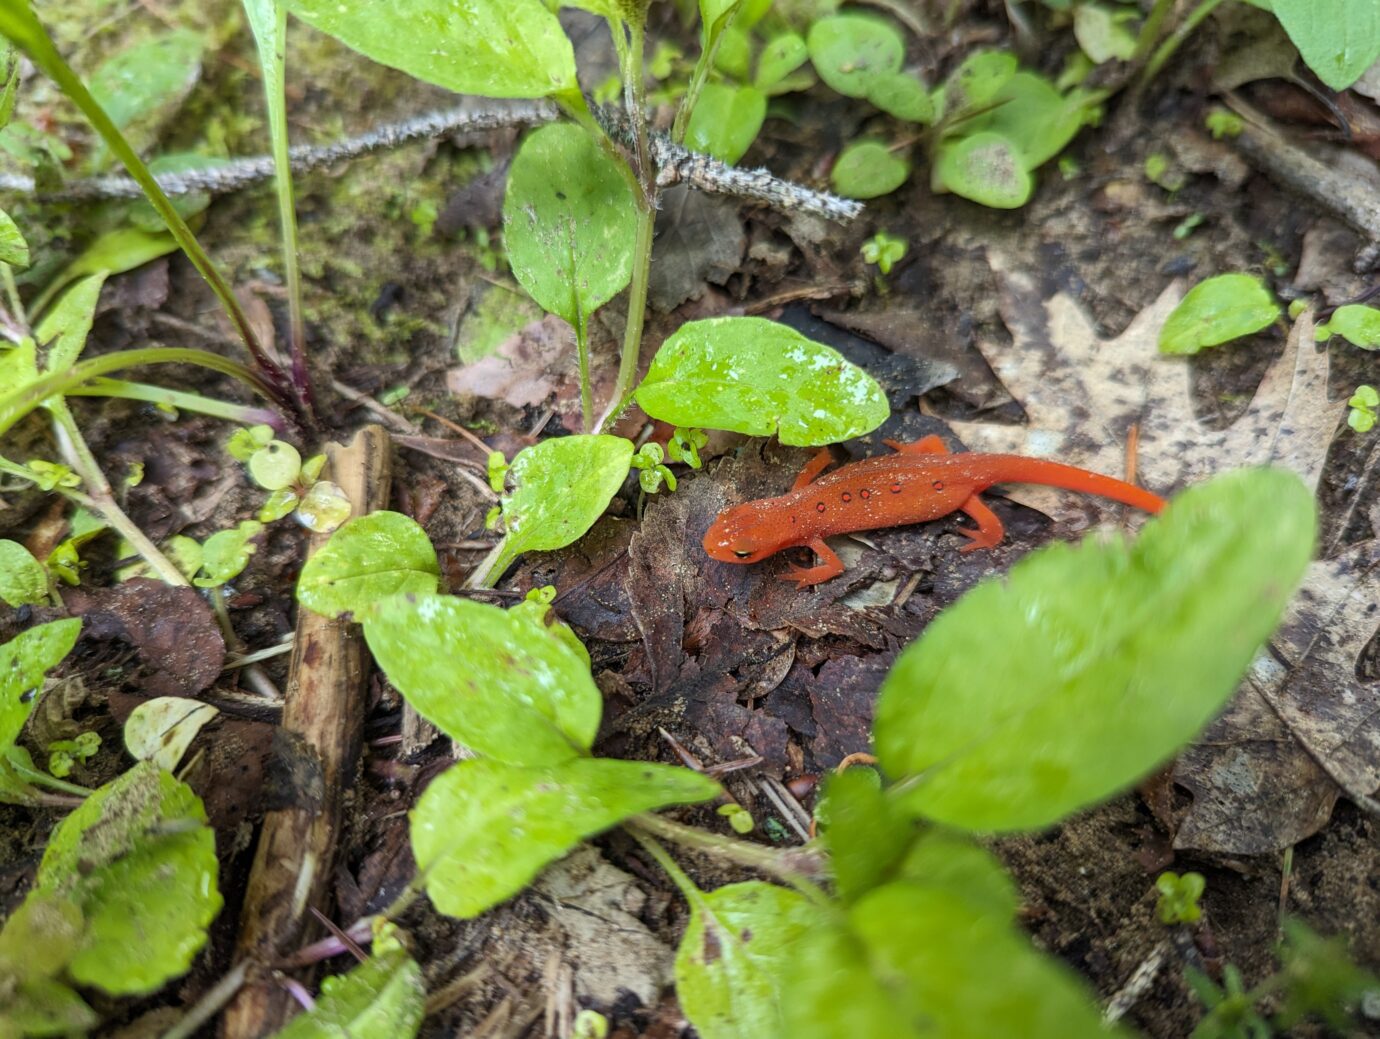 Red-spotted newt (Notophthalmus viridescens viridescens) (Eft)